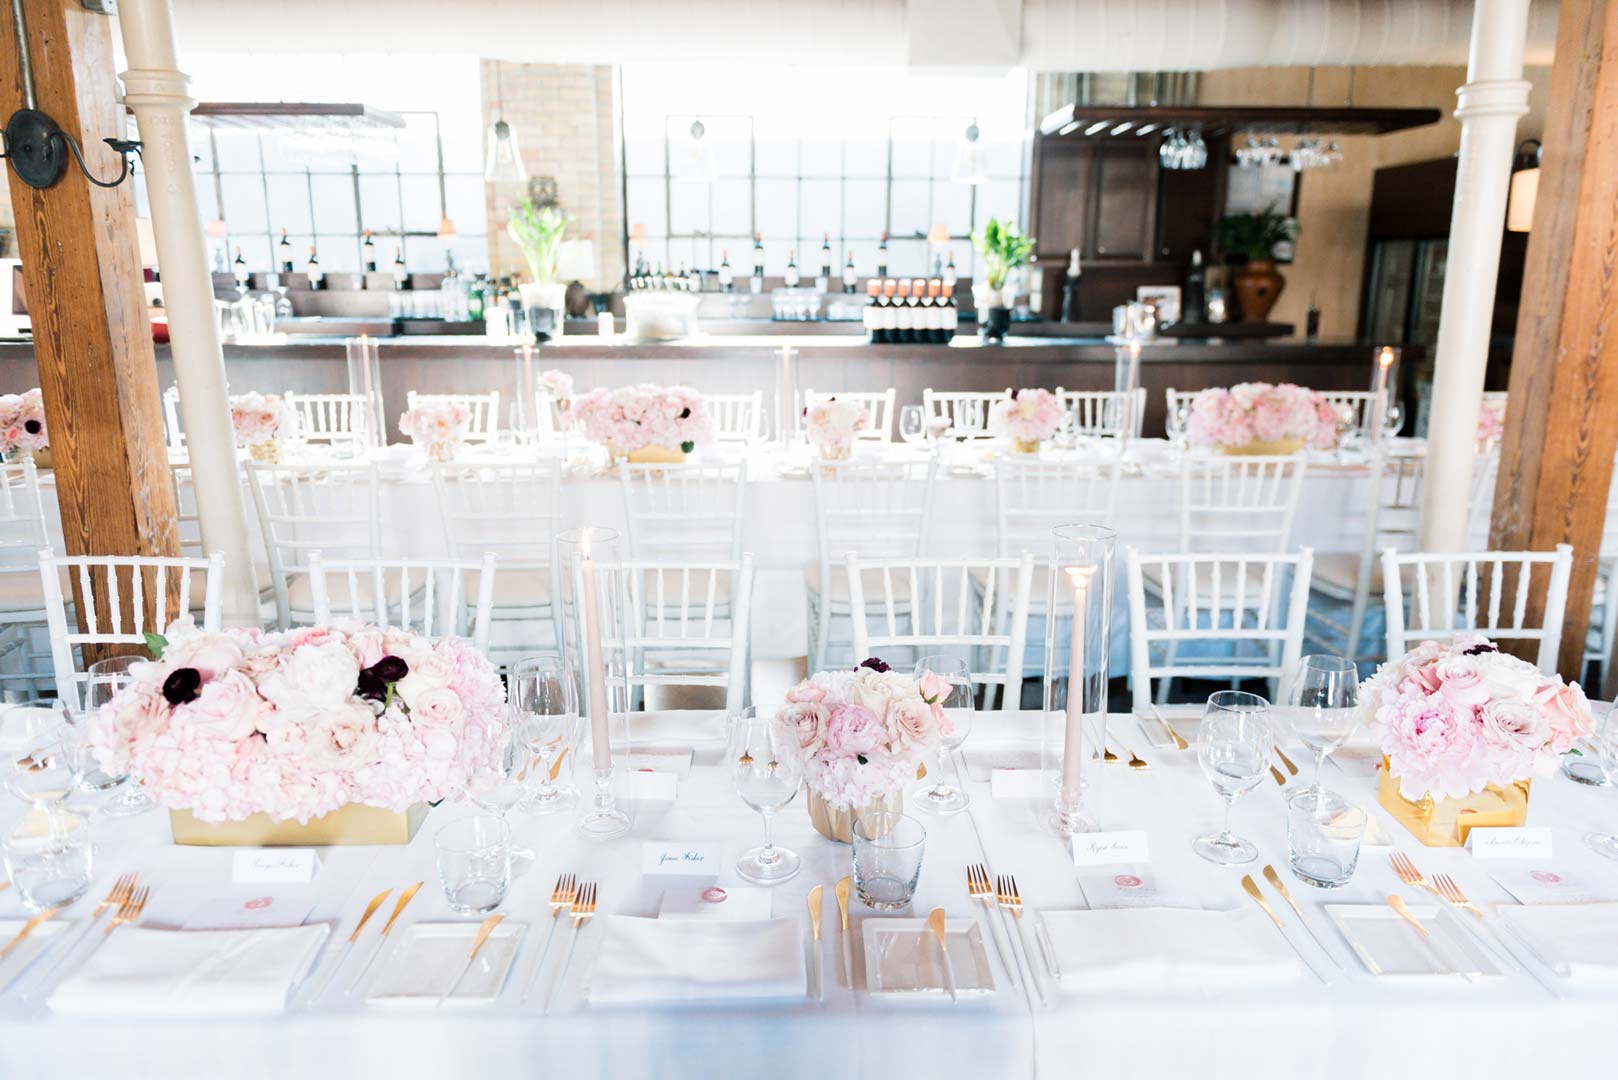 Modern Industrial Loft Wedding Venue Toronto Reception White Chiavari Chairs